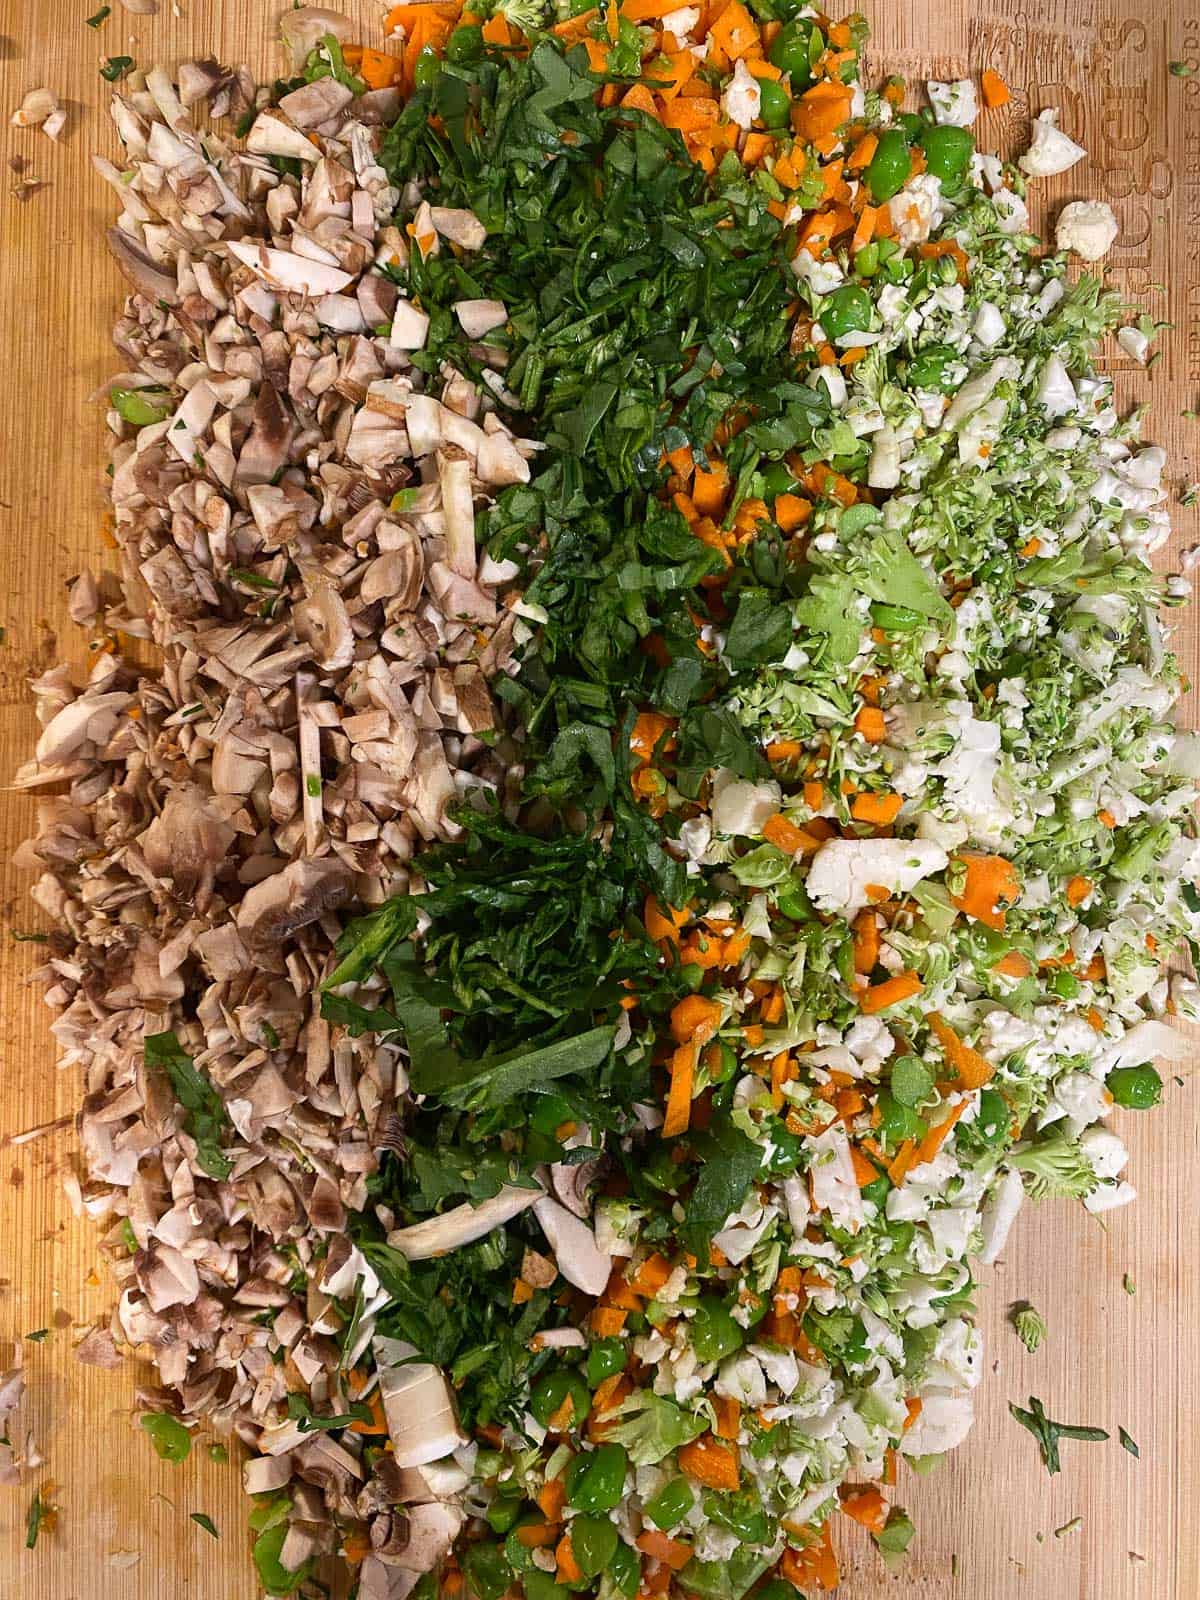 process shot showing minced veggies on cutting board